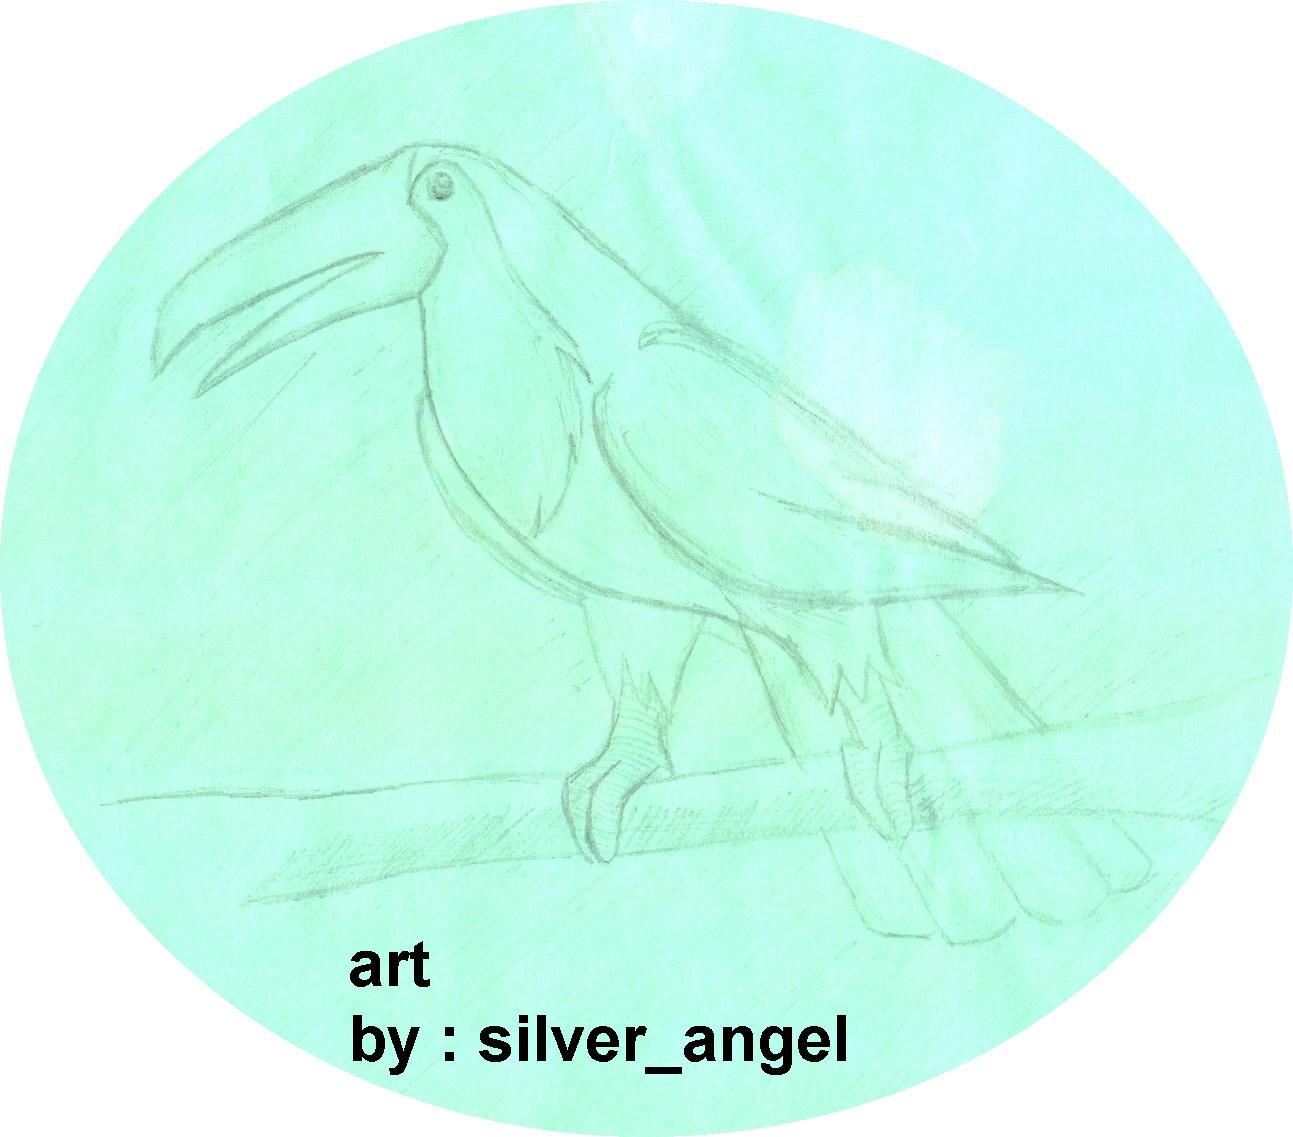 Hornbill by silver_angel